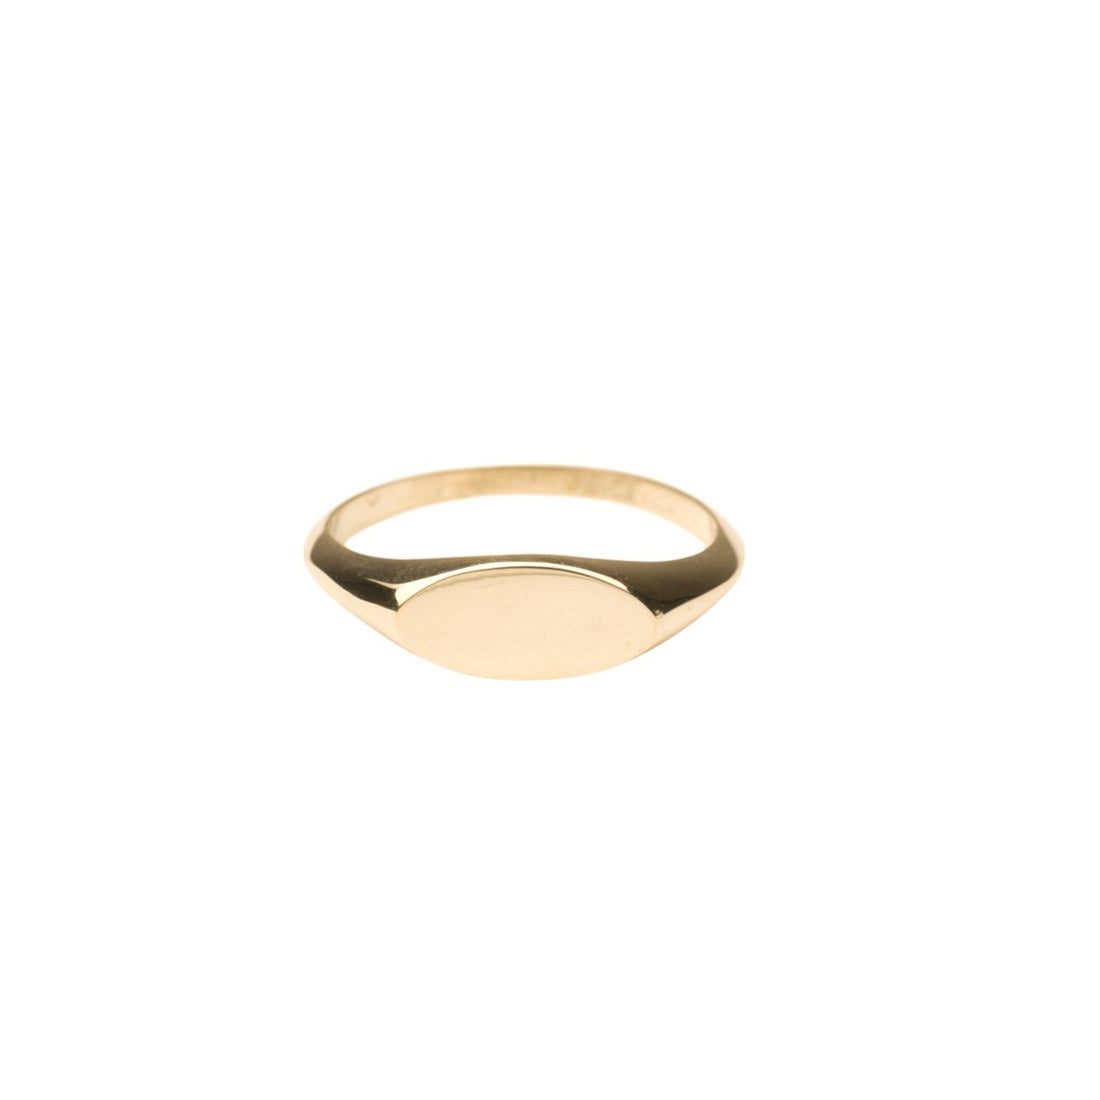 14k Gold Oval Signet Ring